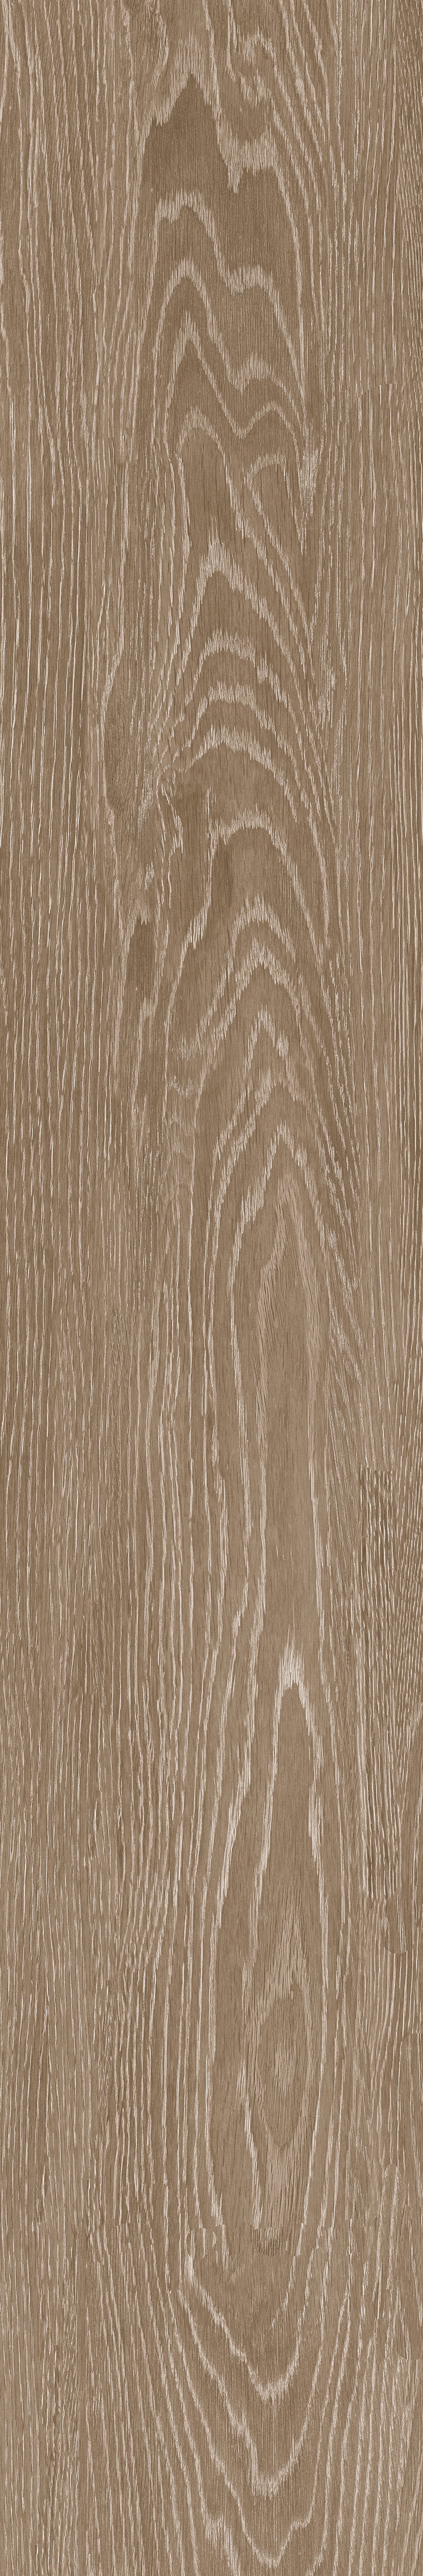 Giania 木紋磚 Bm122804m